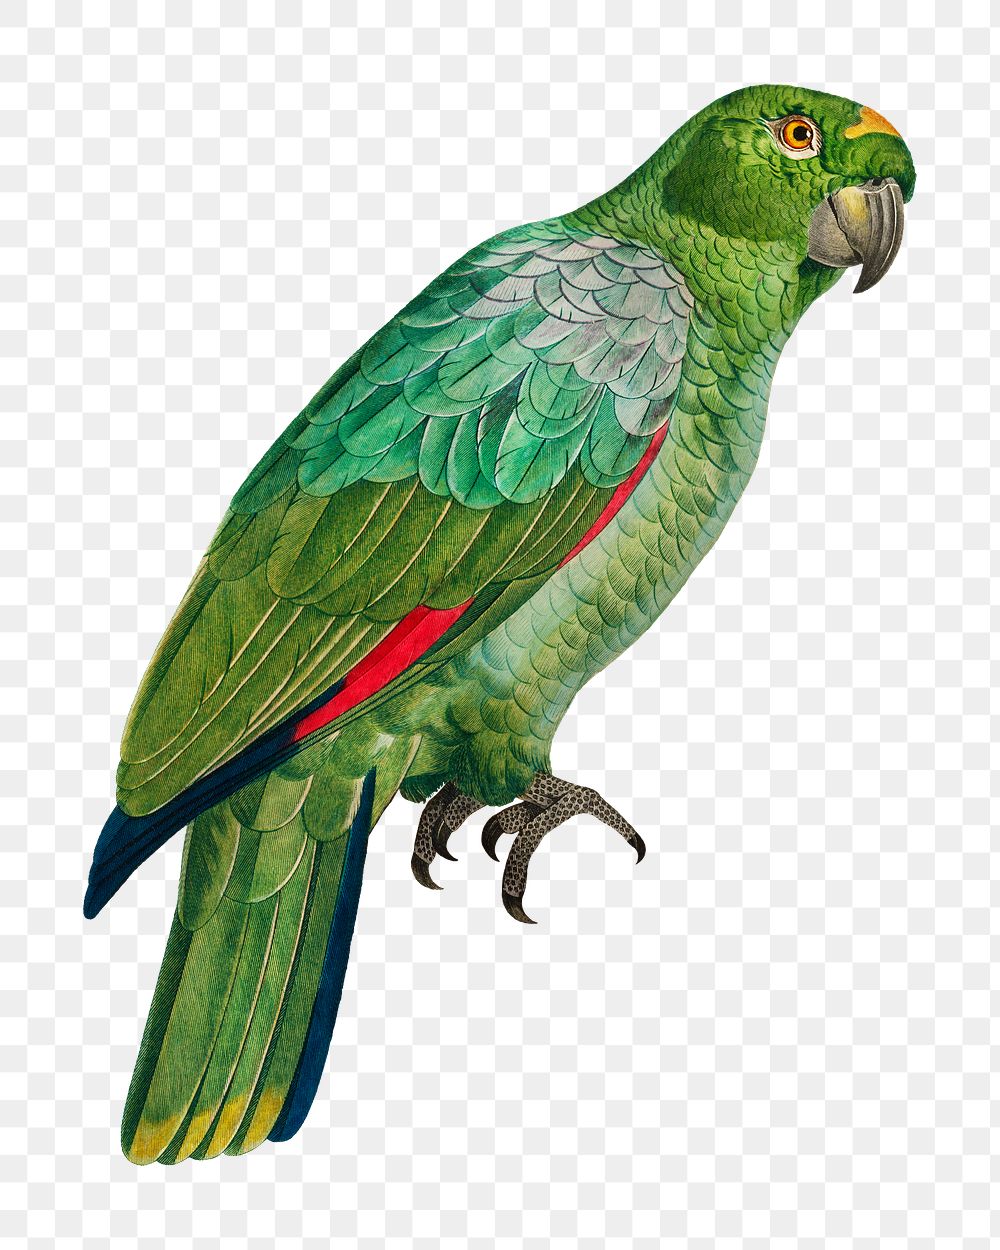 Southern Mealy Amazon parrot png bird sticker, vintage animal illustration, transparent background